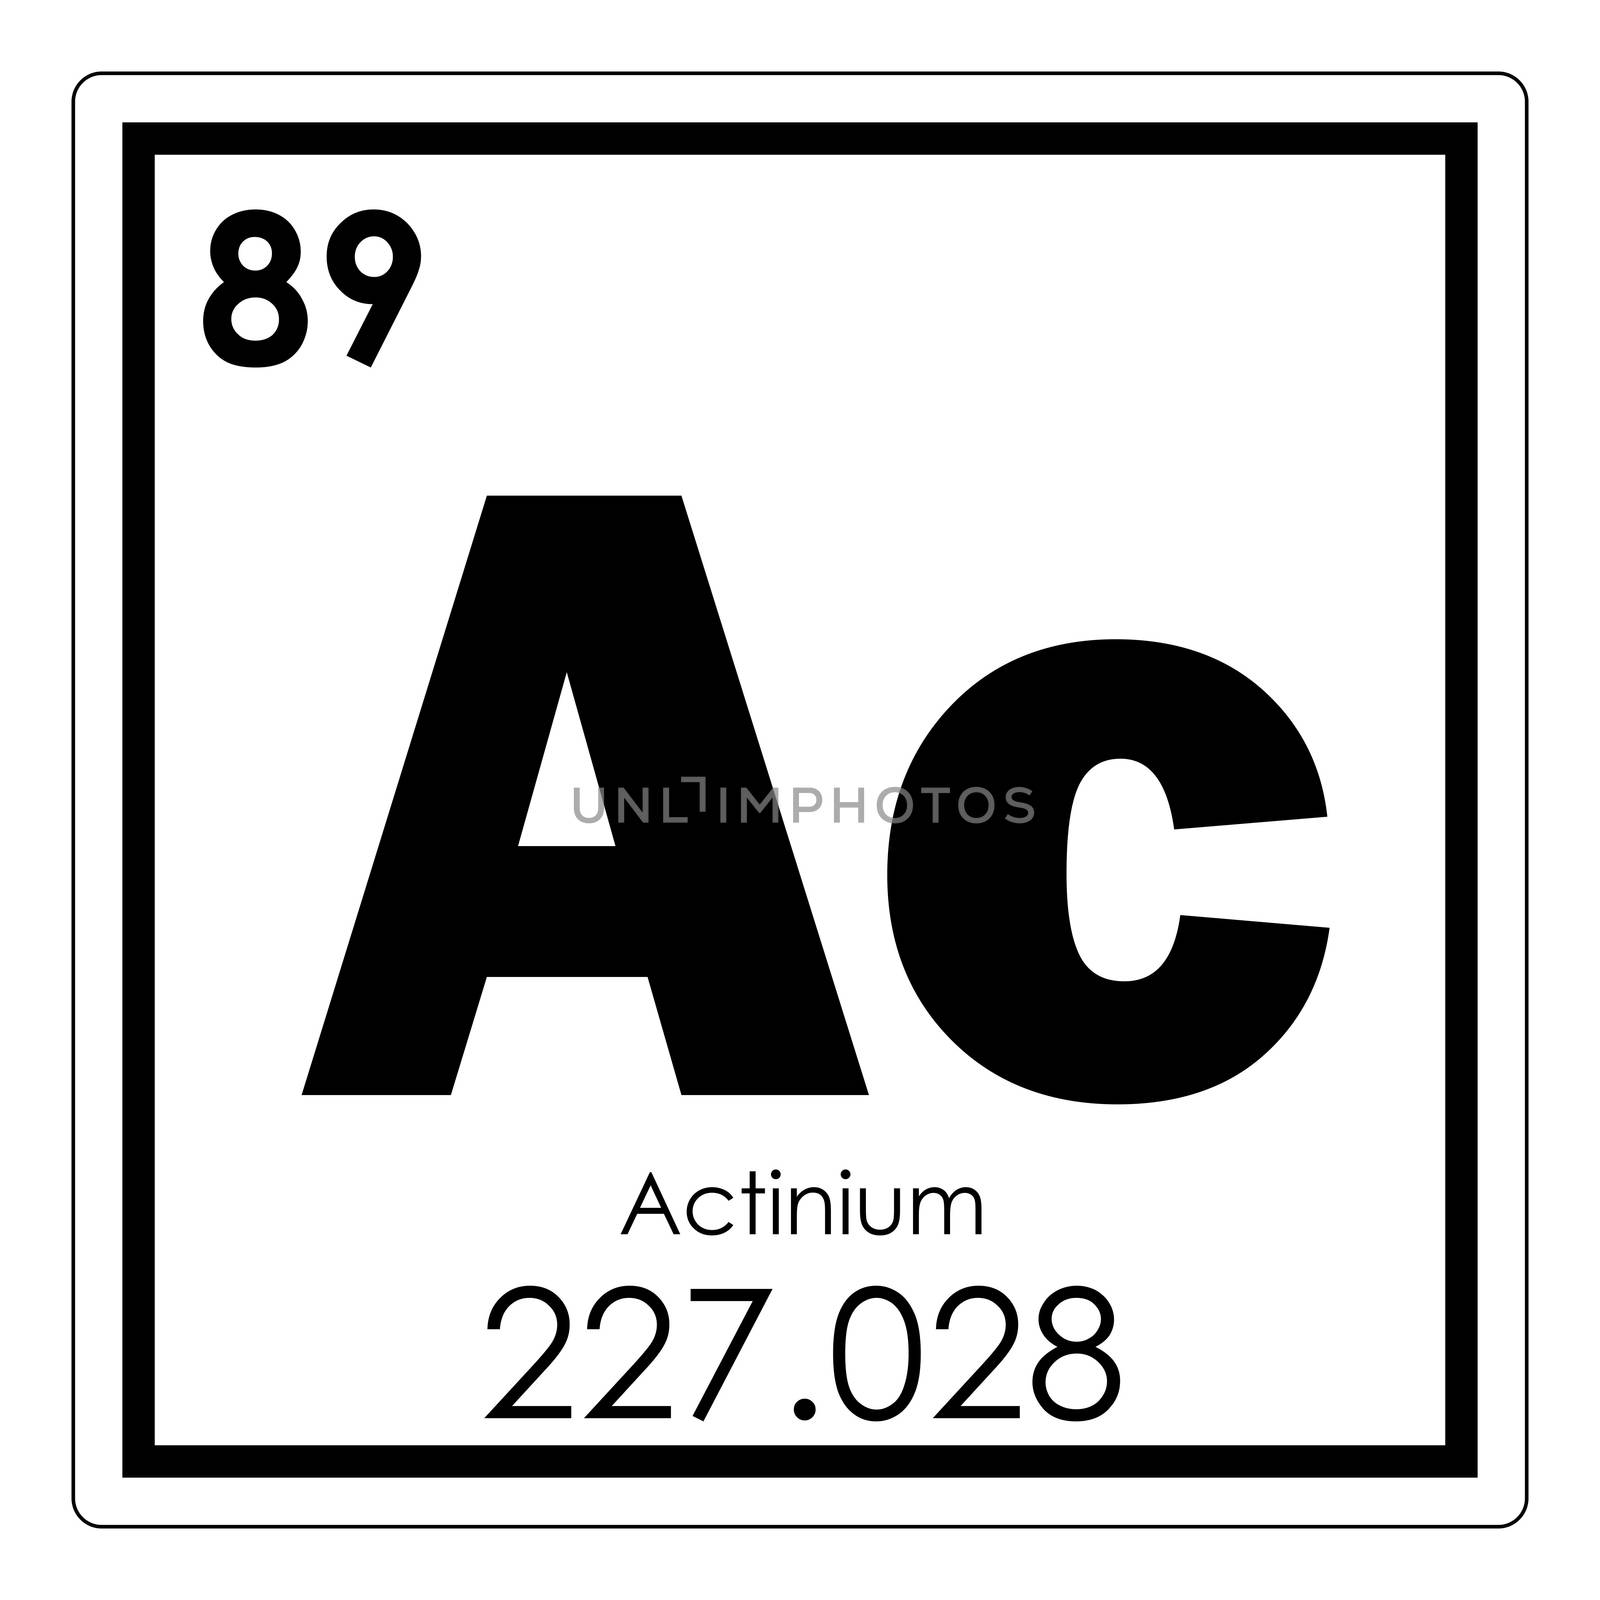 Actinium chemical element by tony4urban